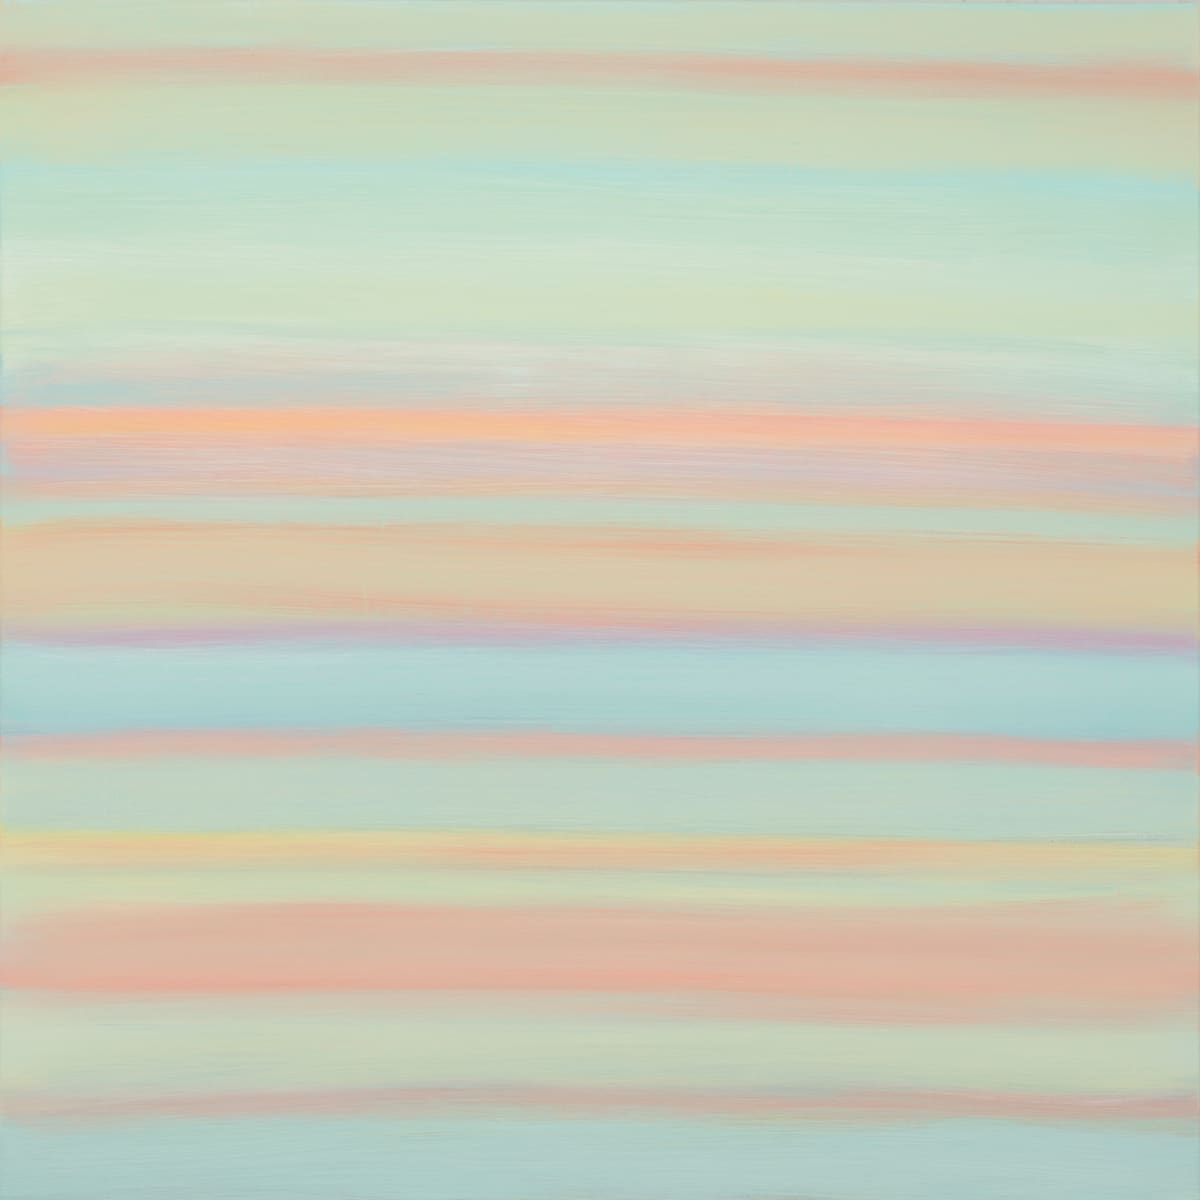 Cloud Stripe no 2 by Shawn Demarest 